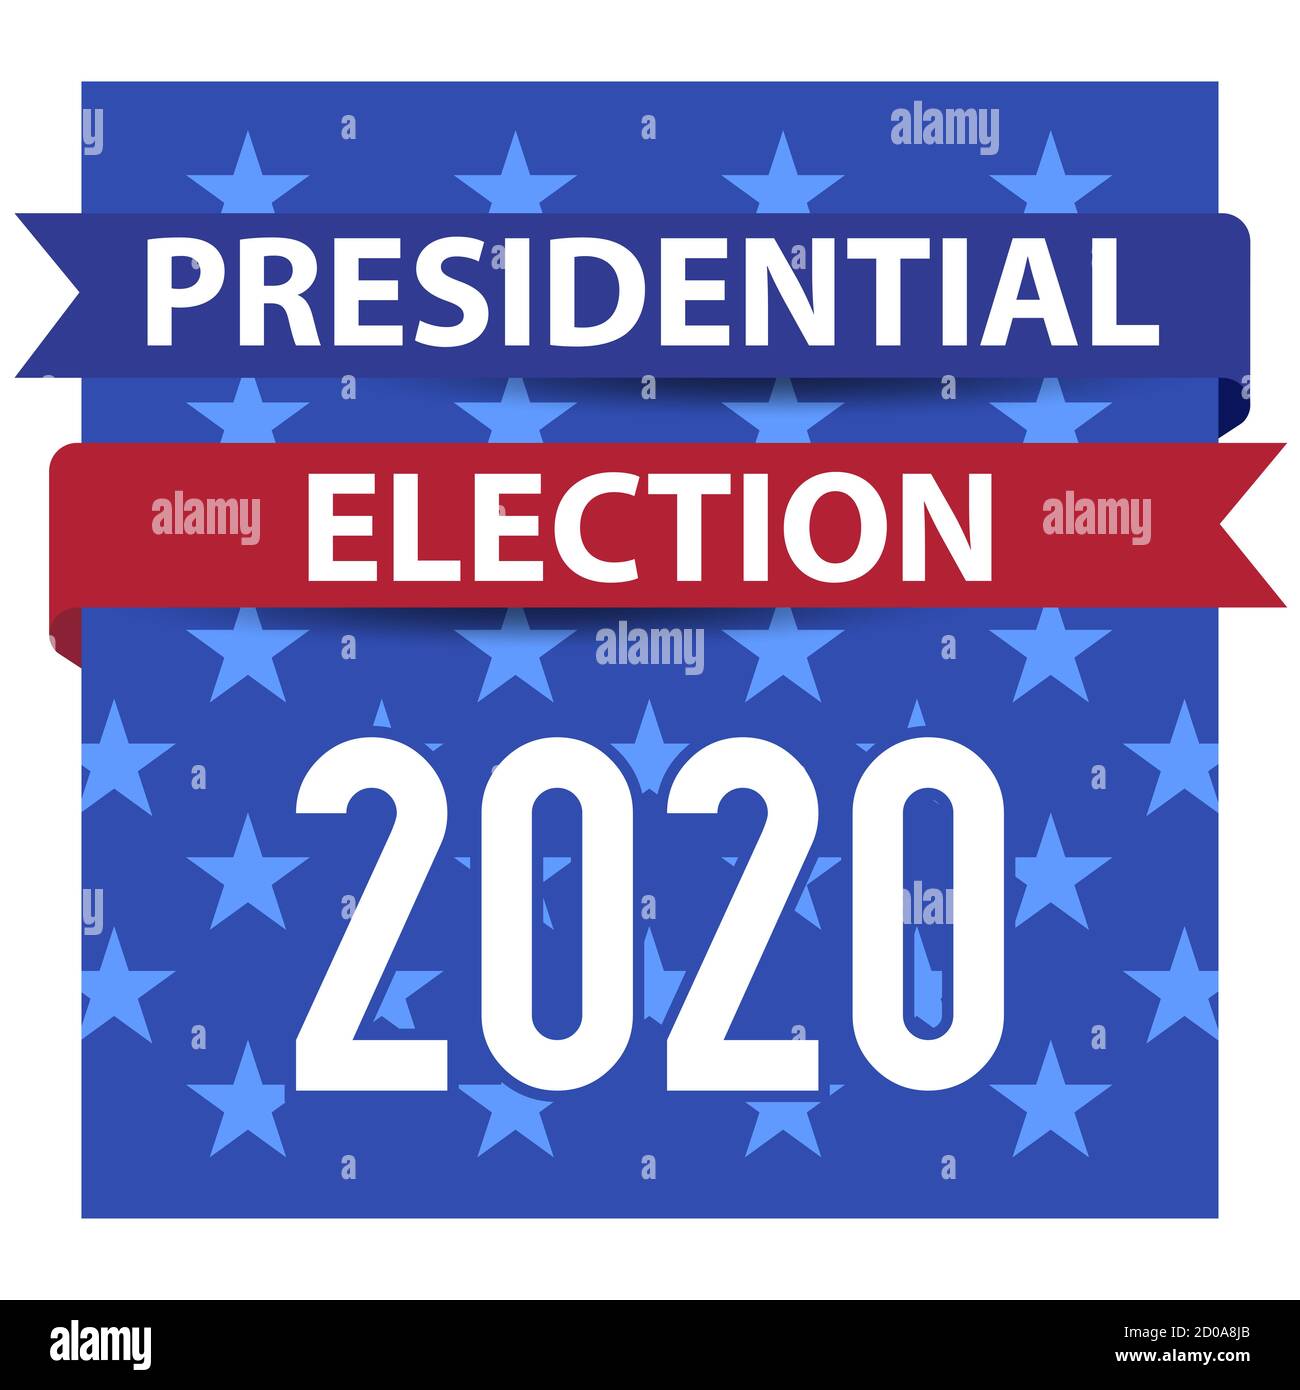 2020 United States presidential election square emblem. illustration. Stock Photo